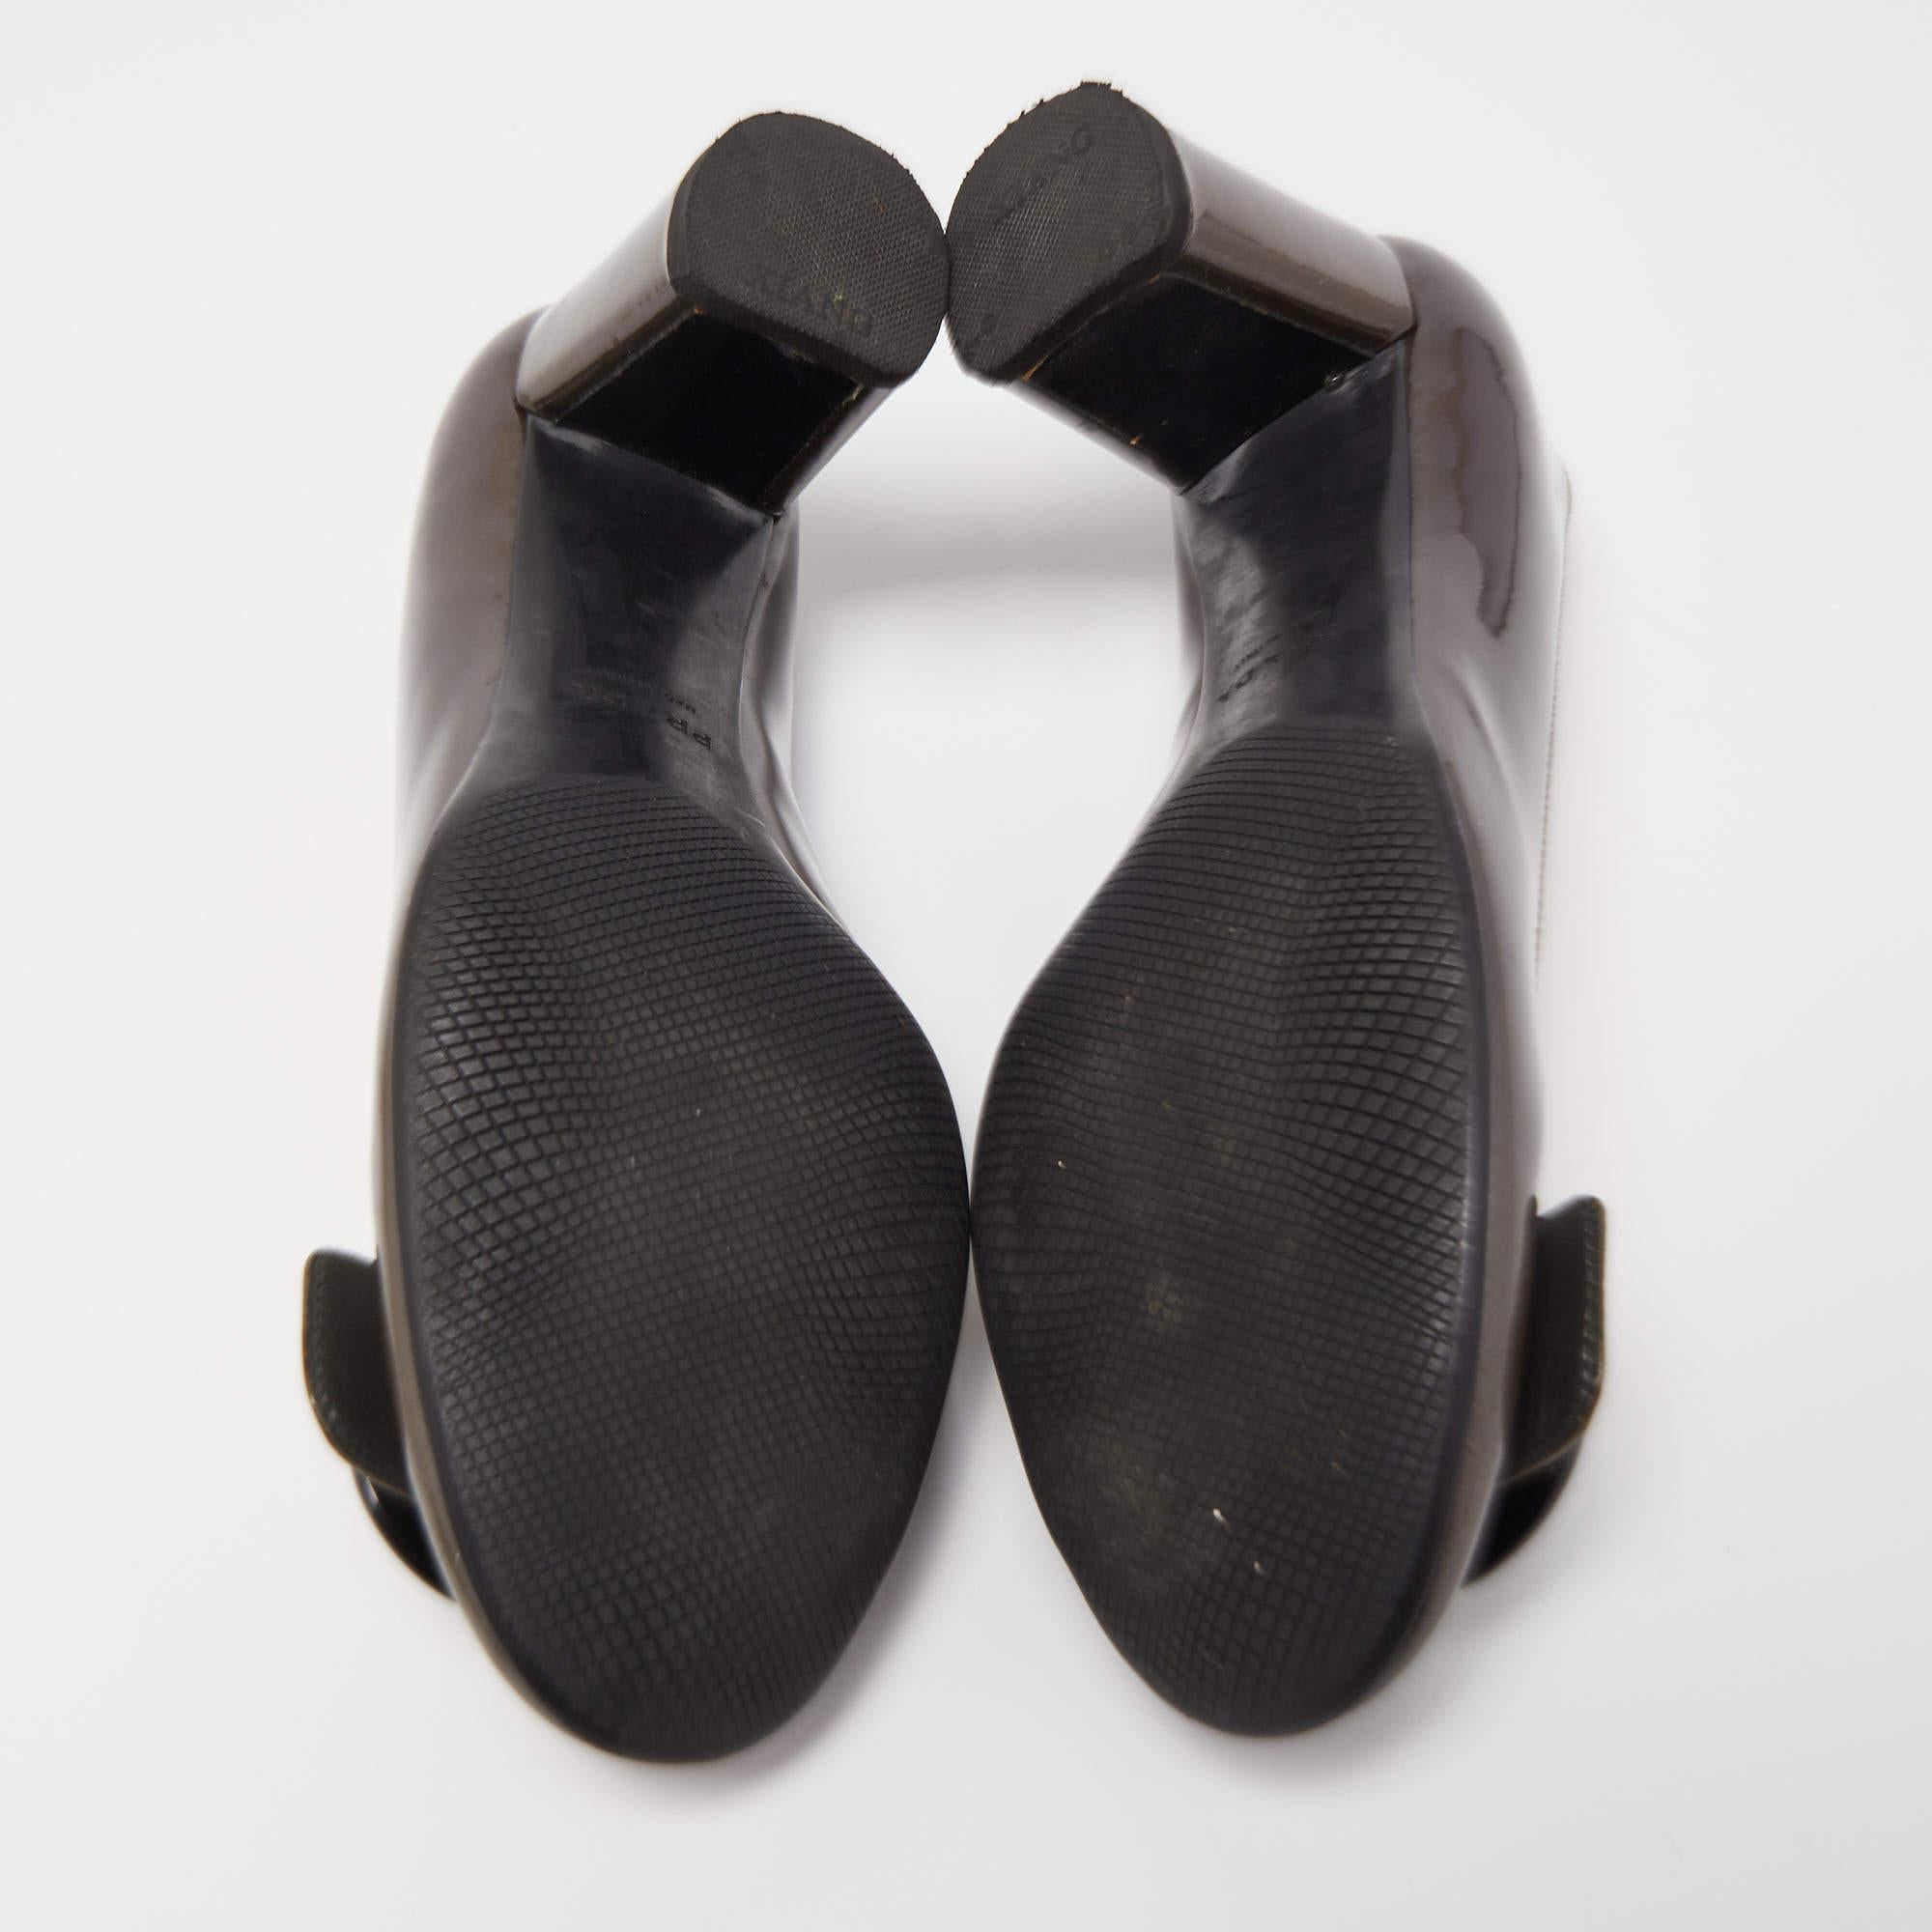 Prada Dark Grey Patent Leather Buckle Detail Block Heel Pumps Size 36.5 1